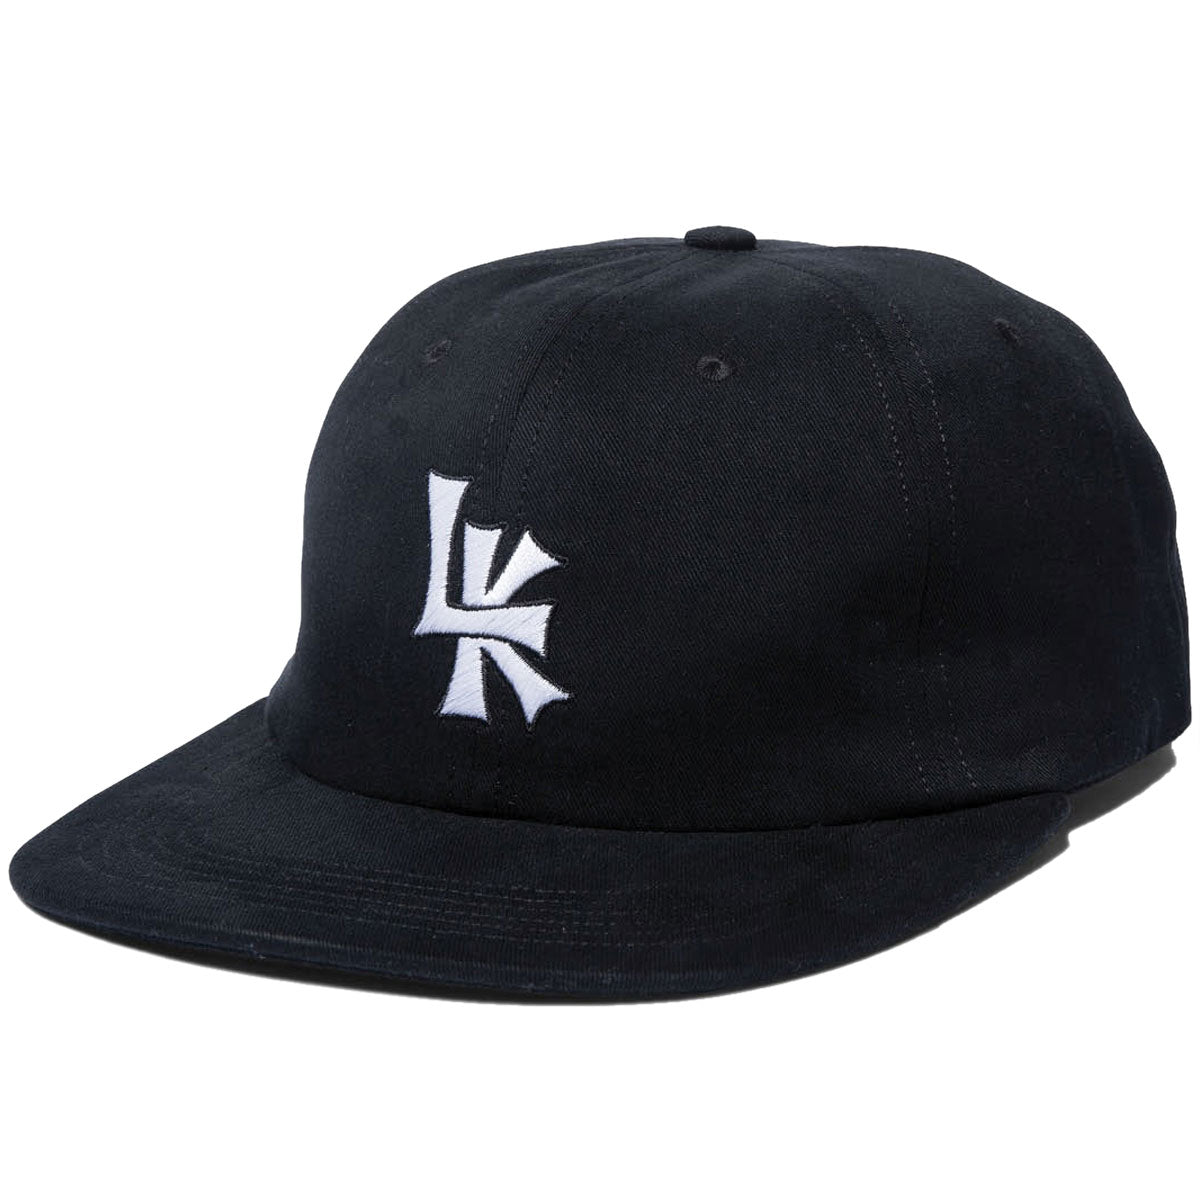 Lakai Fielder Snapback Hat - Black image 1